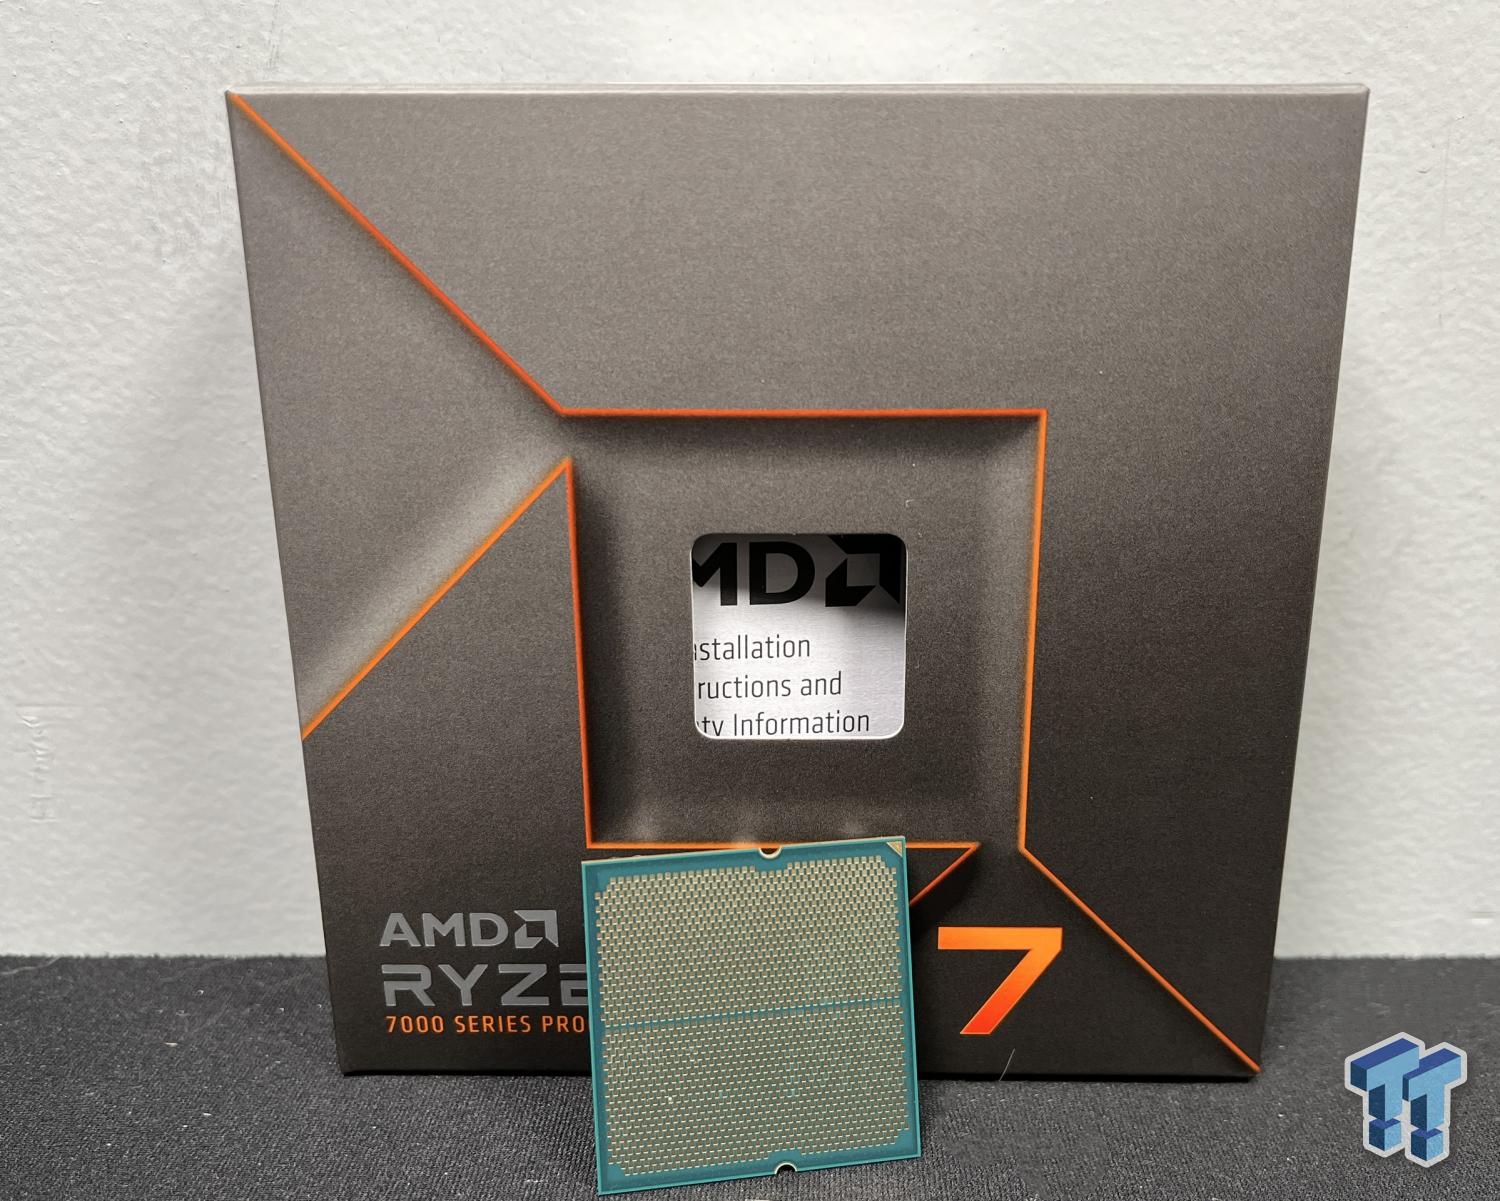 AMD Ryzen 7 7700 review: The new best mid-range AMD CPU